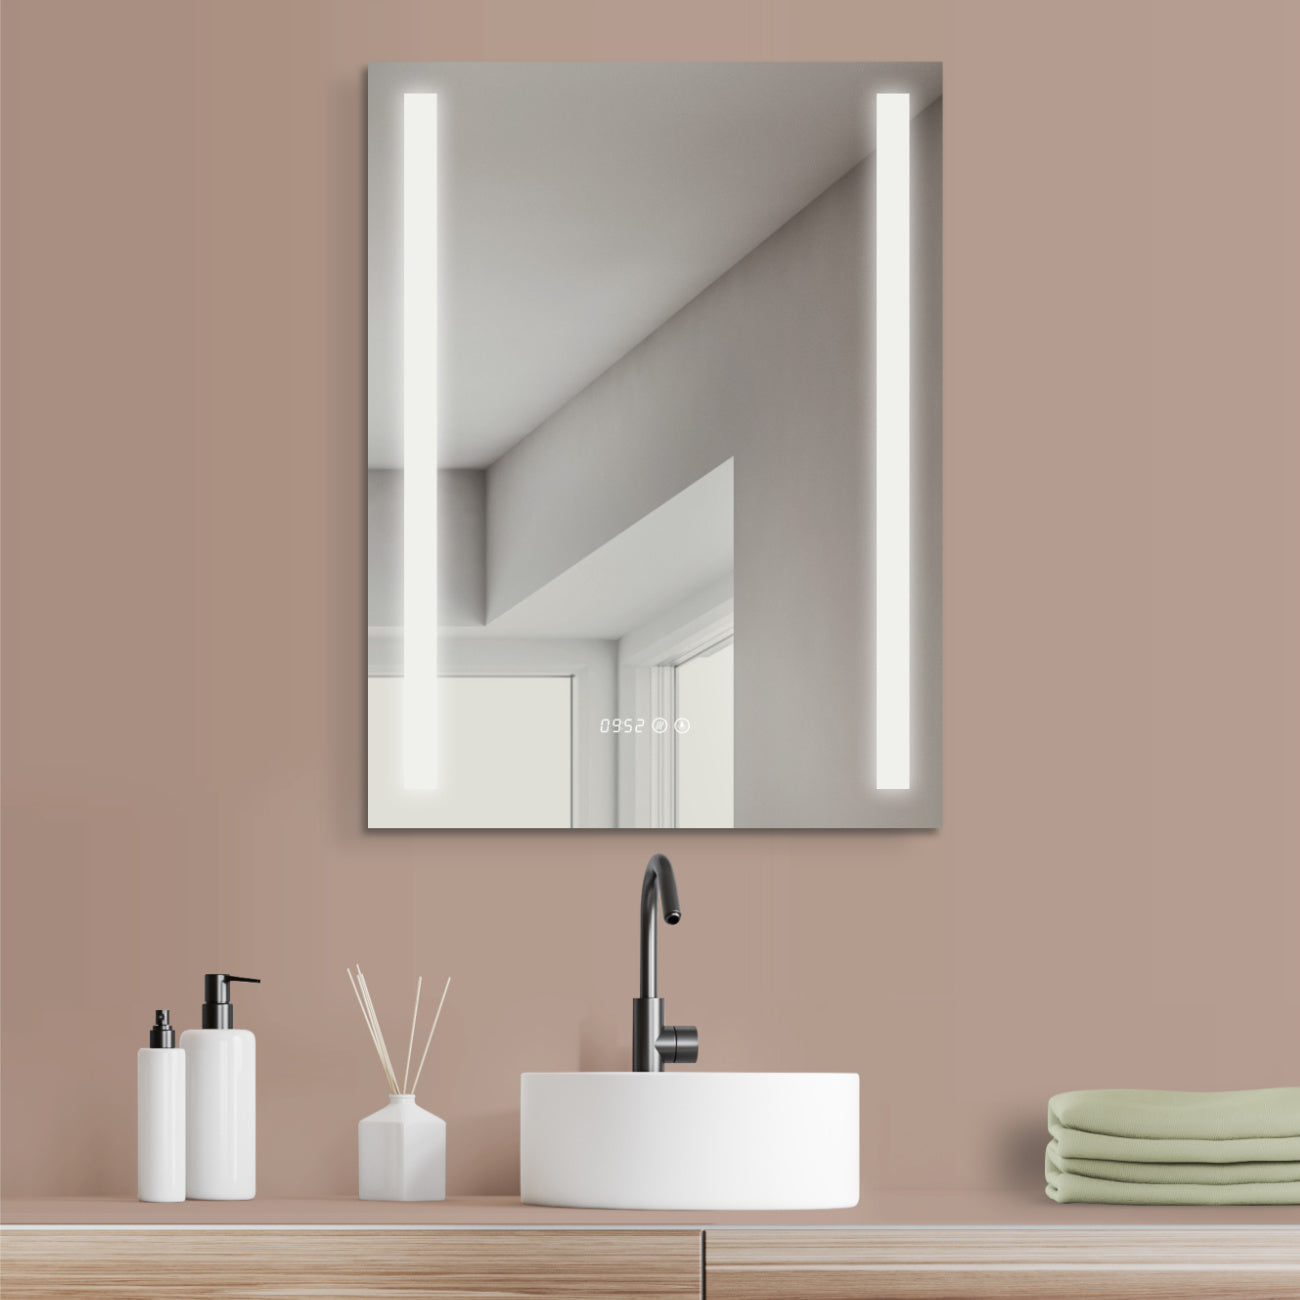 ANTI-FOG LED bathroom mirror with digital clock, light change warm white / cool white side light